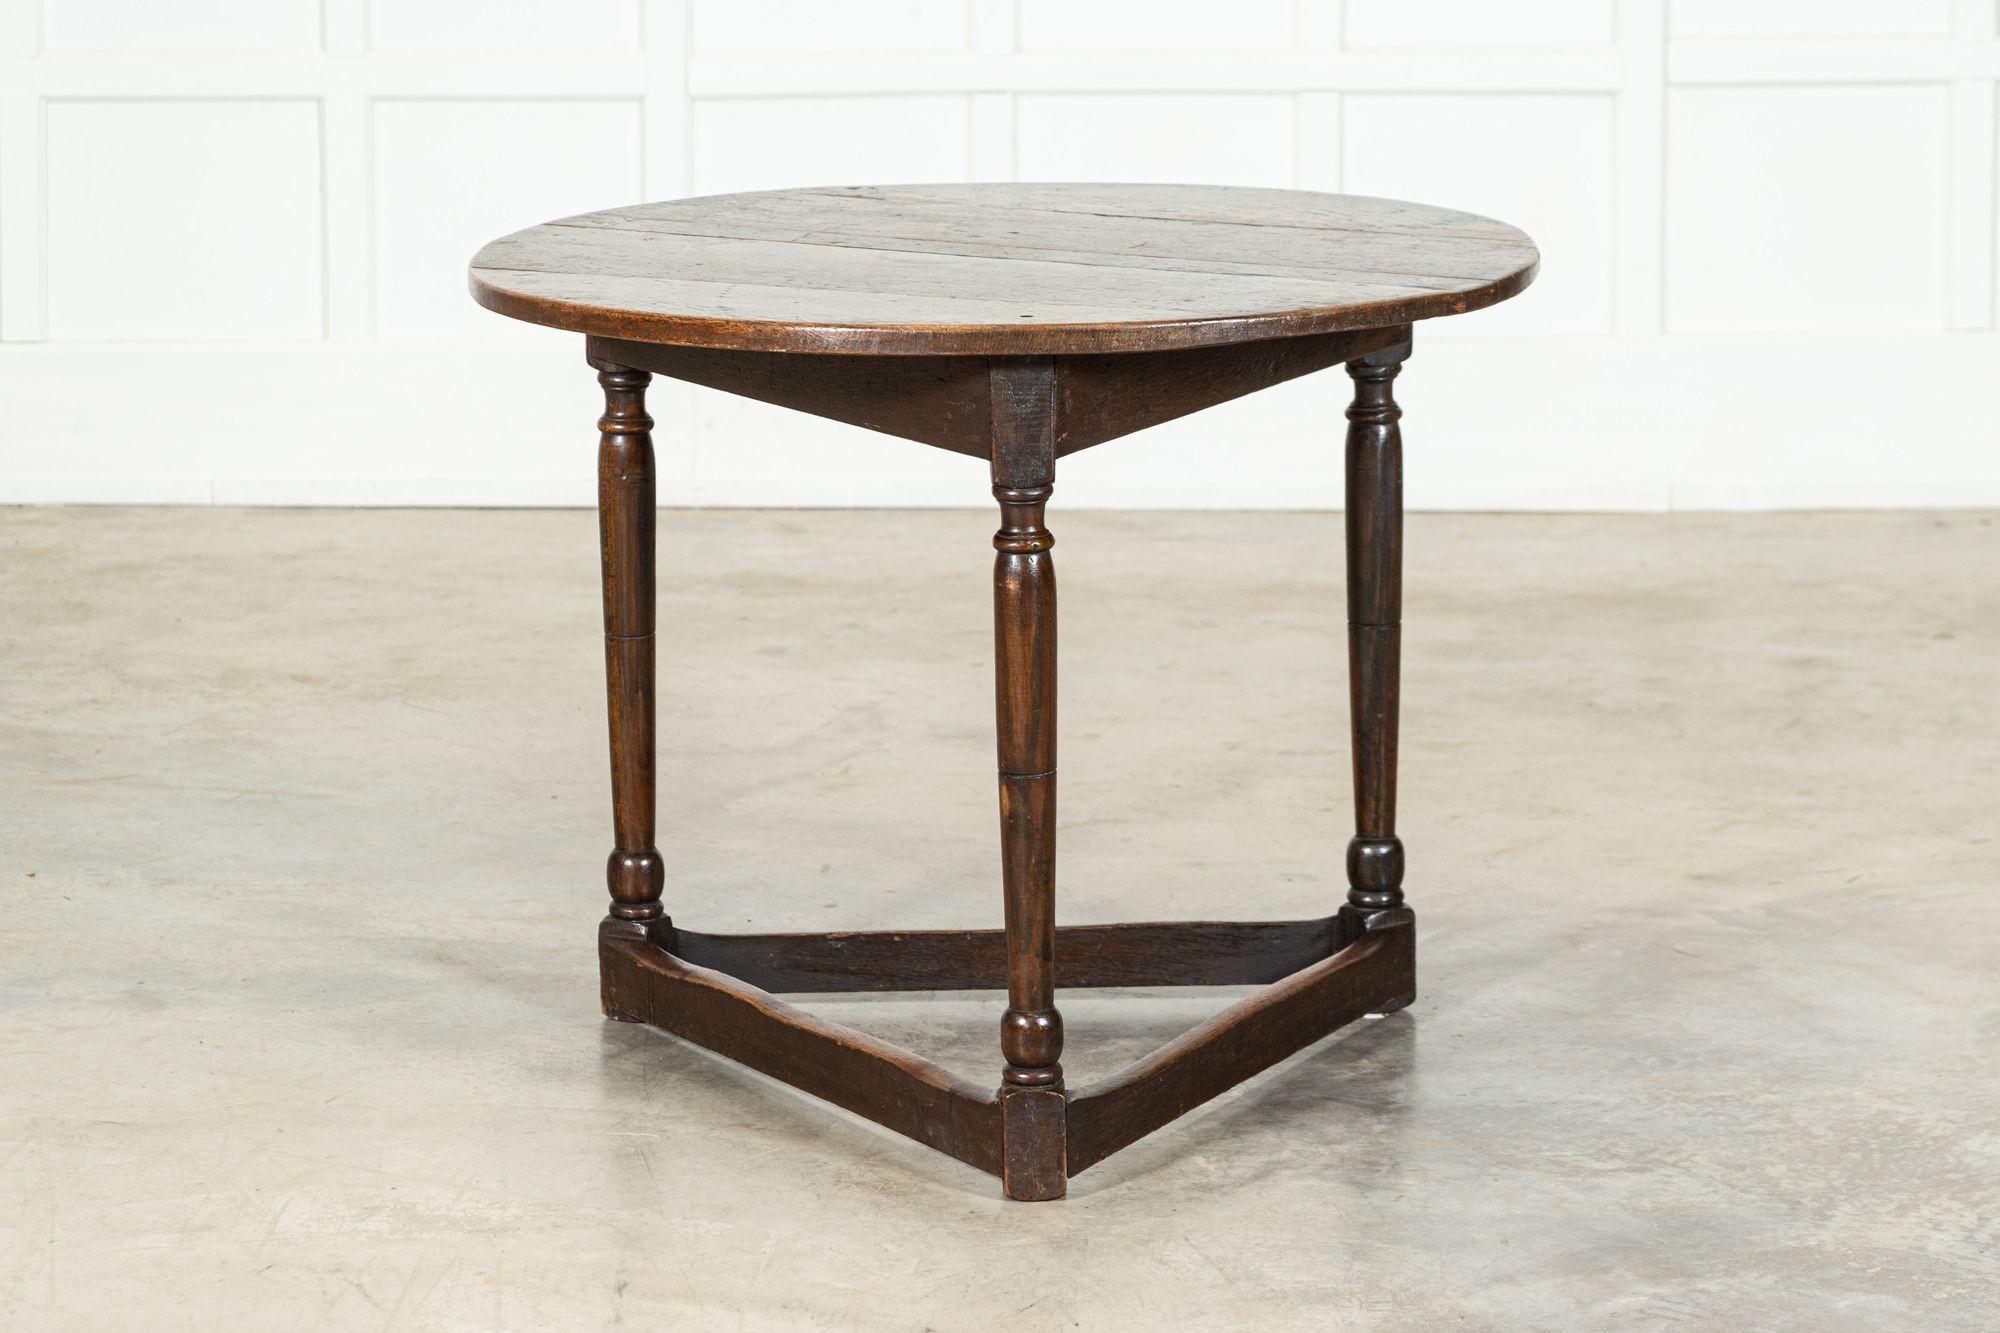 circa 1790

English 18thC Oak Cricket Table

sku 1801

W91 x D91 x H72 cm

Weight 20 kg